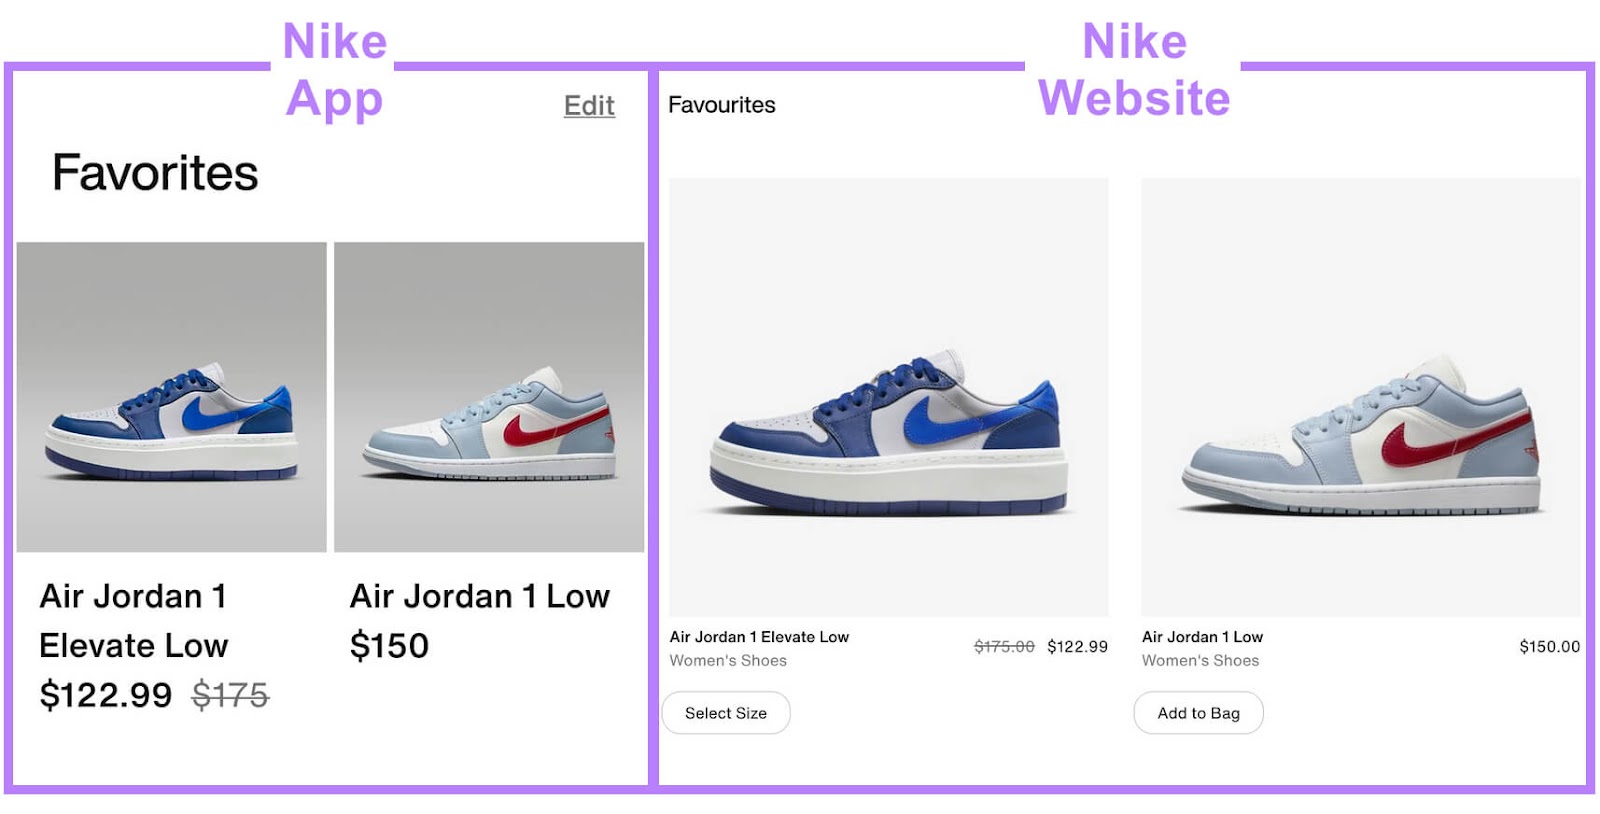 Air Jordan merchandise  listings successful  Nike's app (left) and website (right)